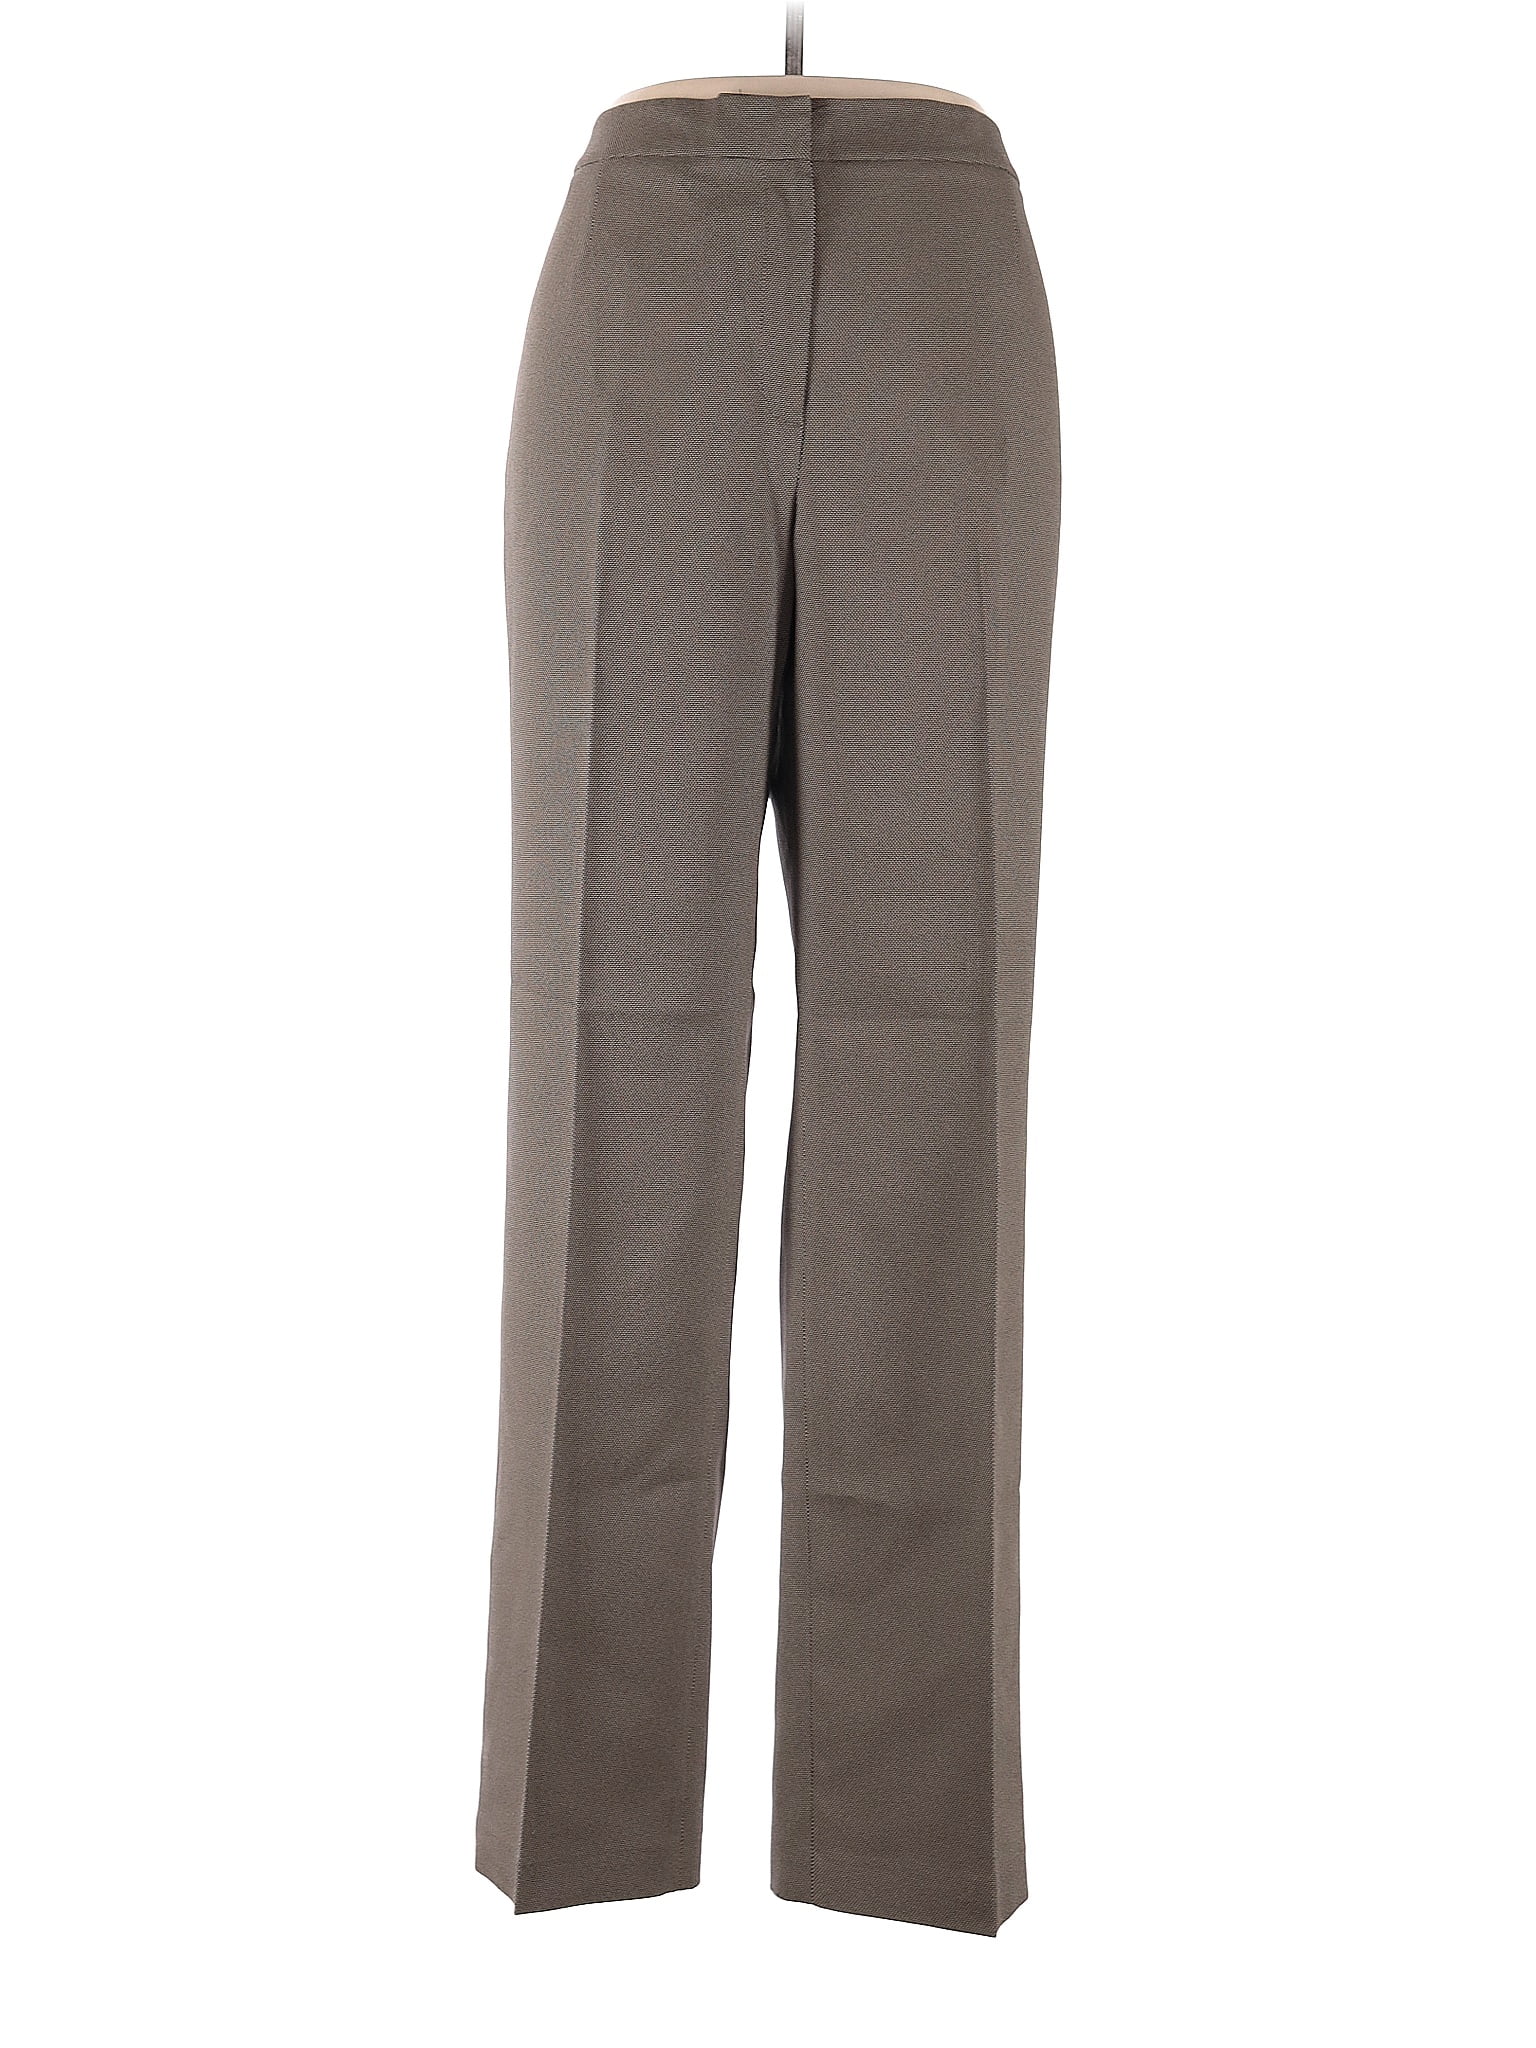 Kasper Solid Gray Brown Dress Pants Size 14 - 74% off | thredUP